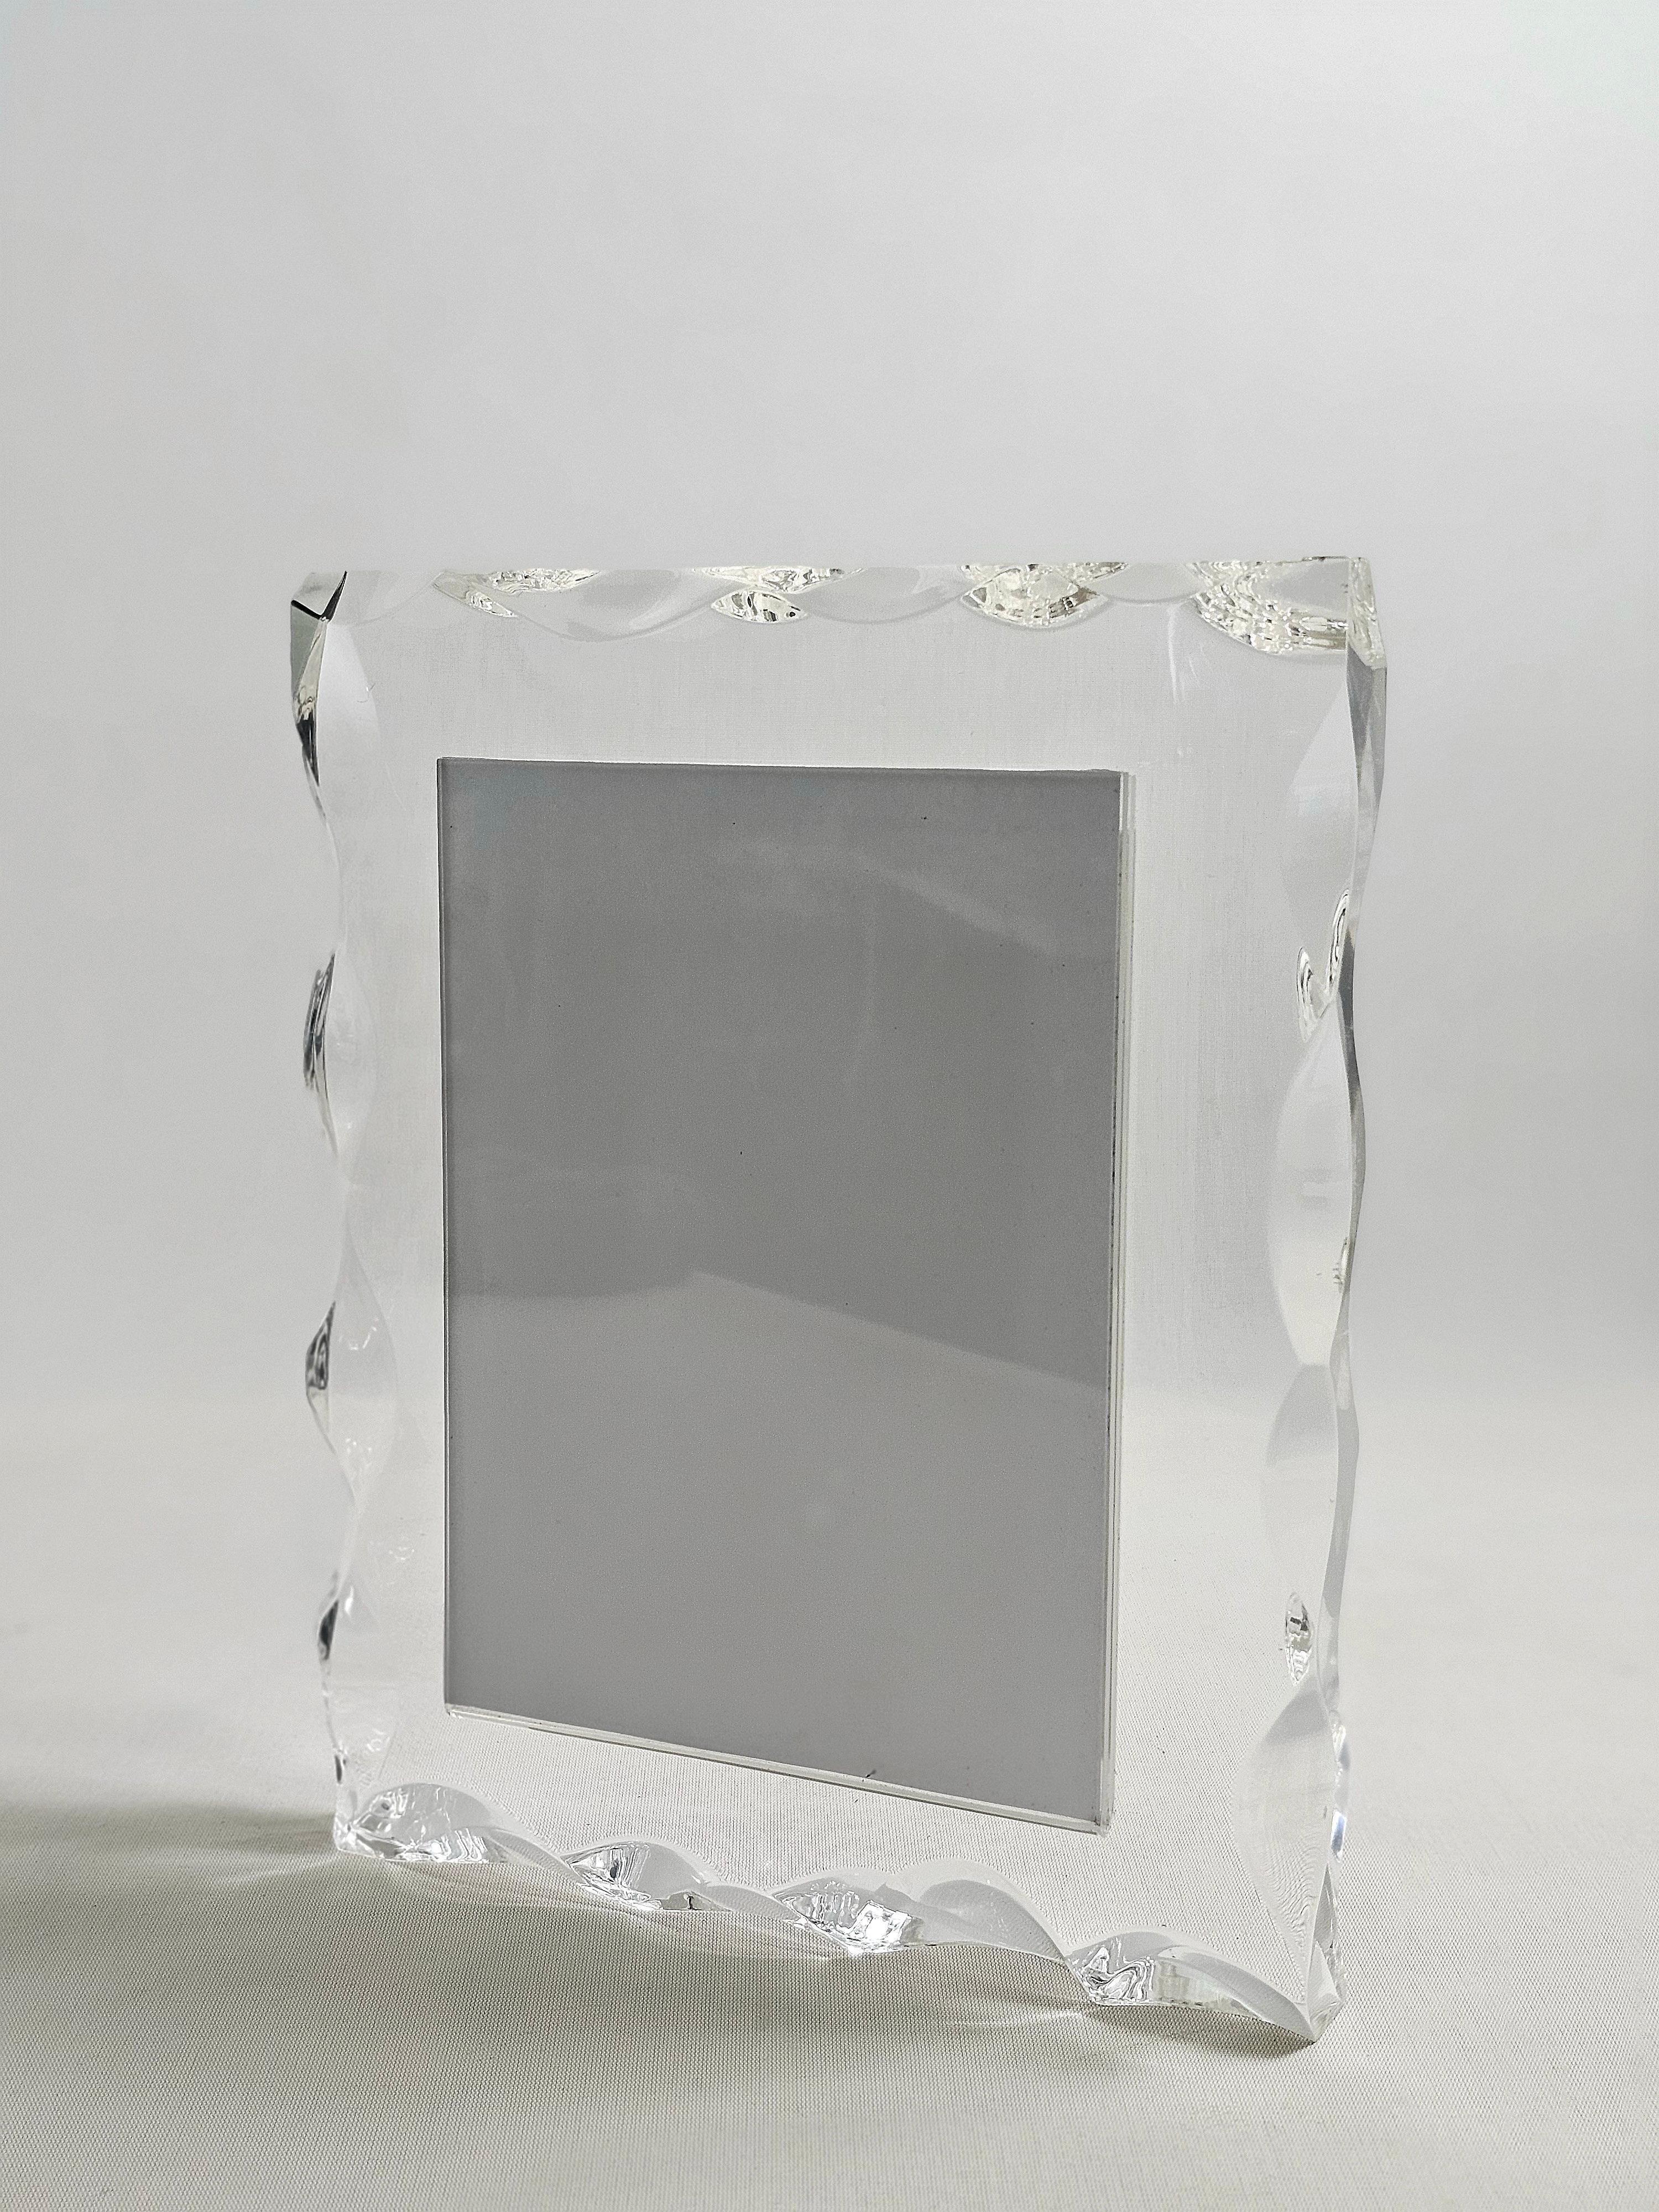 20th Century Decorative Object Picture Frame Plexglass Midcentury Italian Design 1980s For Sale